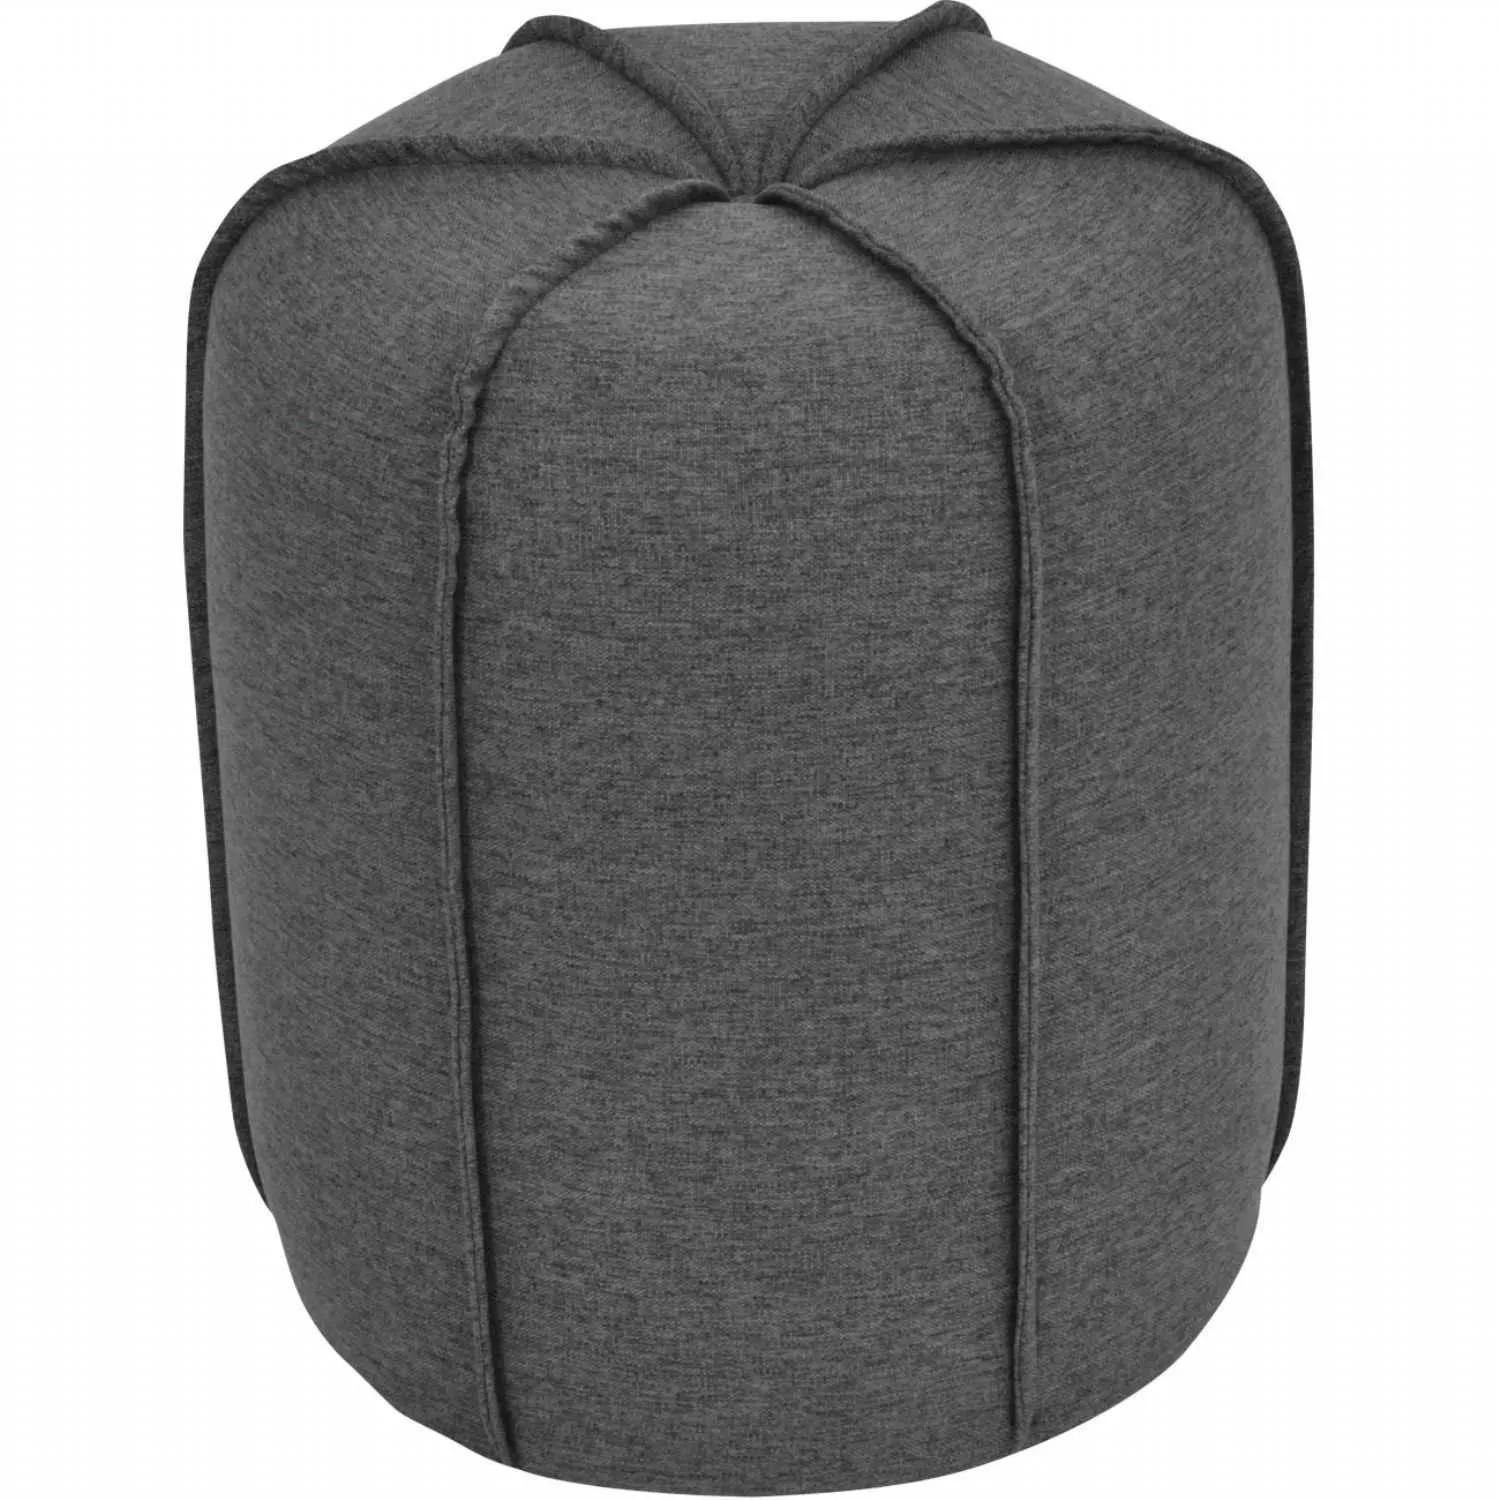 Seamed Button Stool in Smoke Grey Fabric